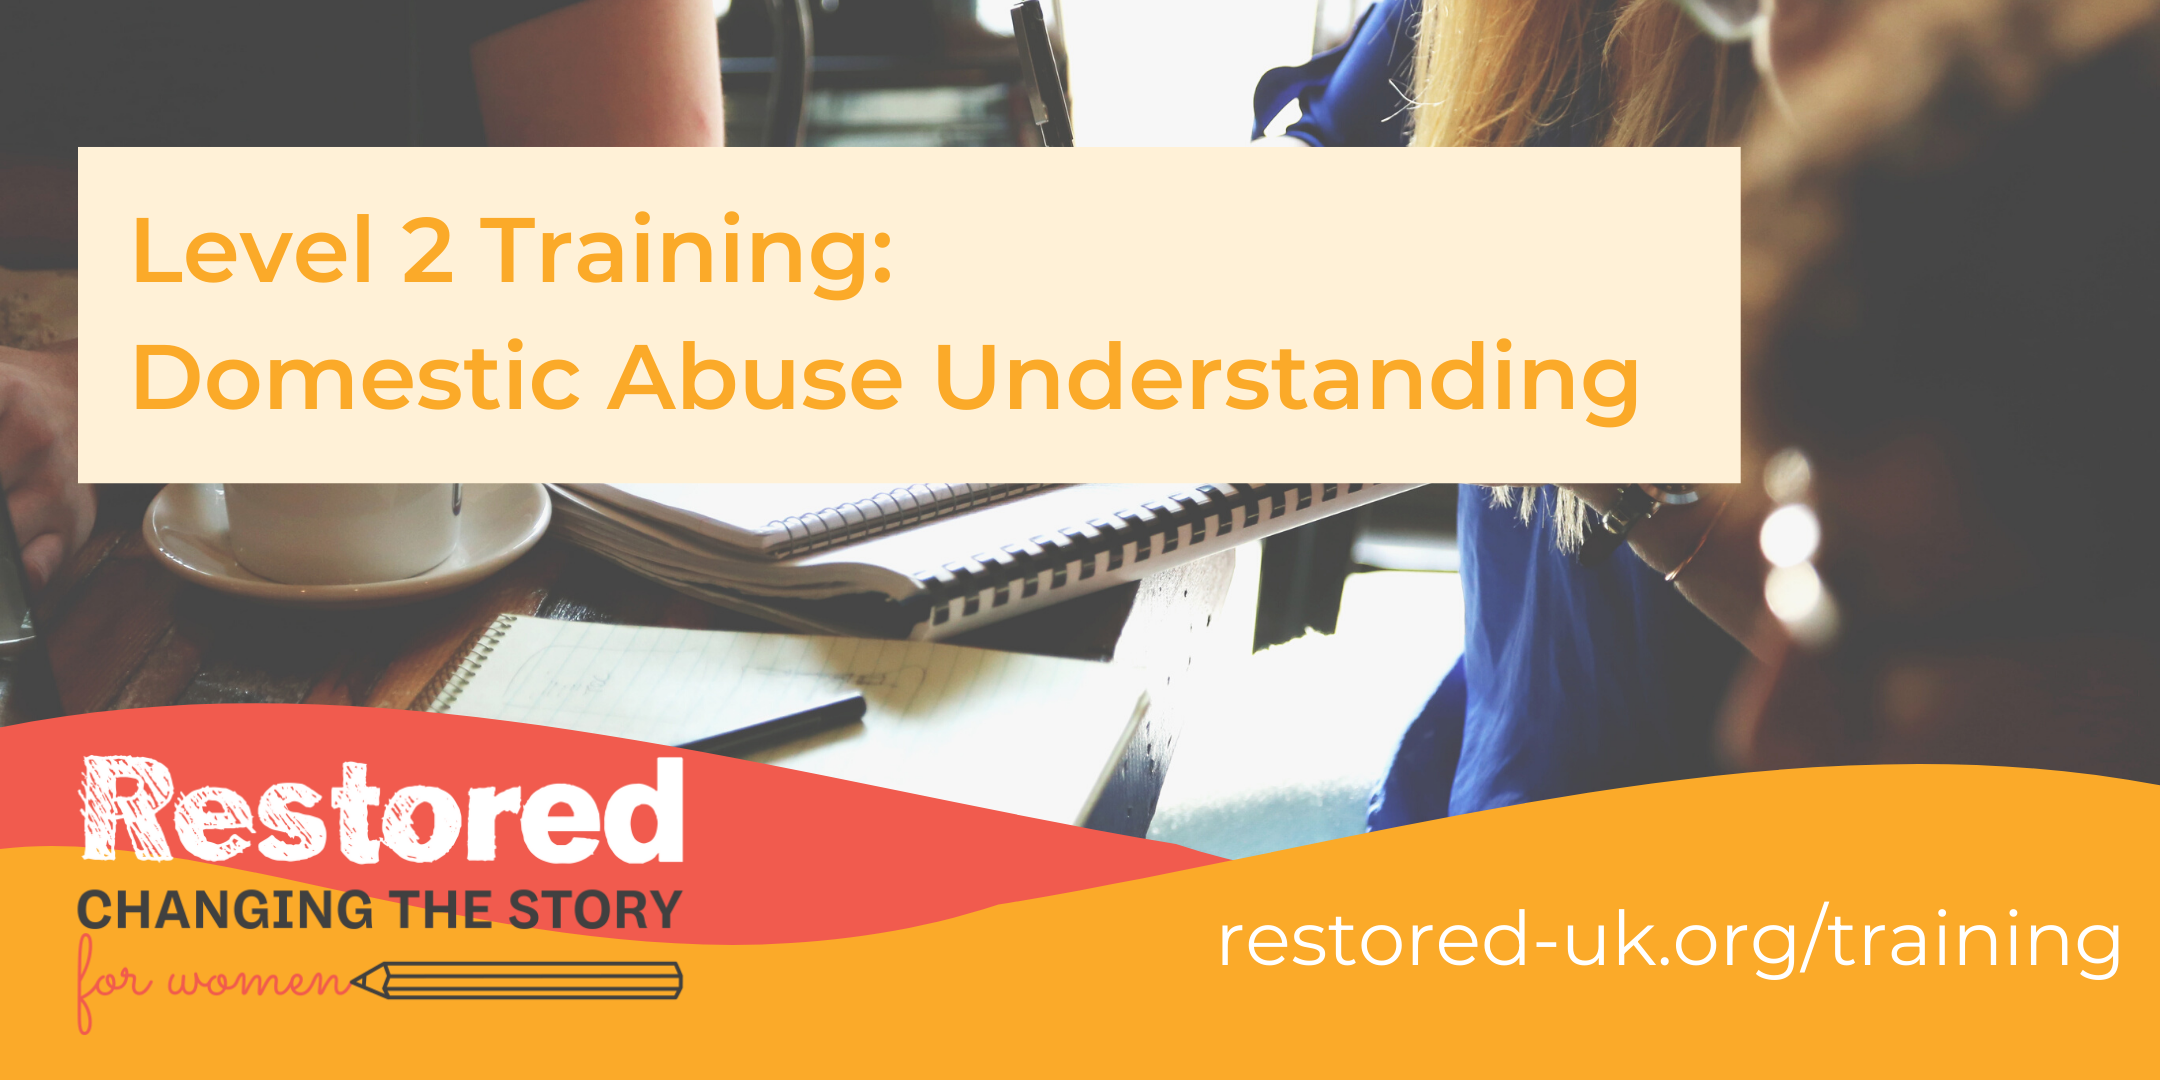 Level 2 Training: Domestic Abuse Understanding